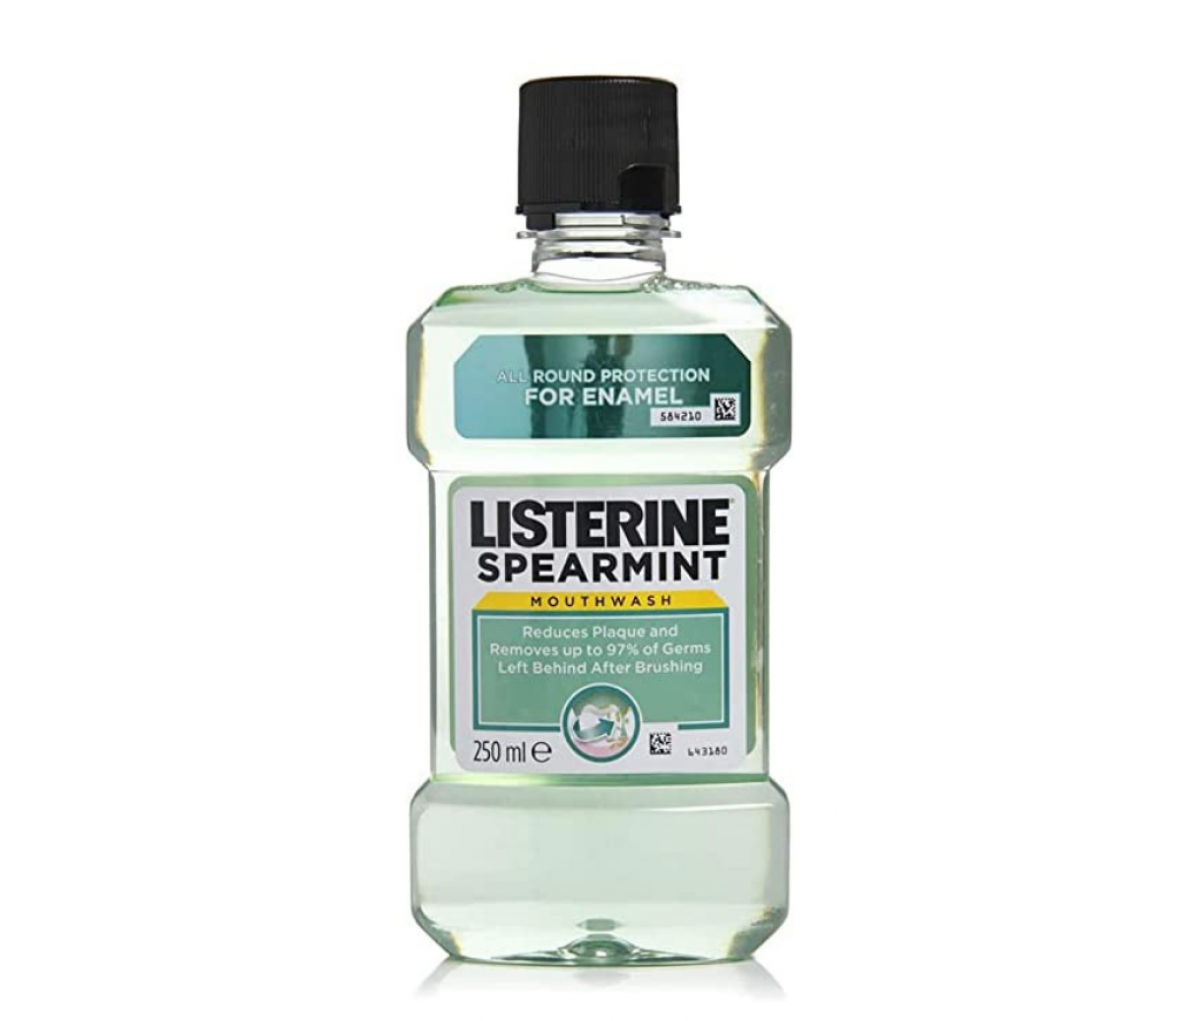 Listerine 250ml Spearmint Mouth Wash